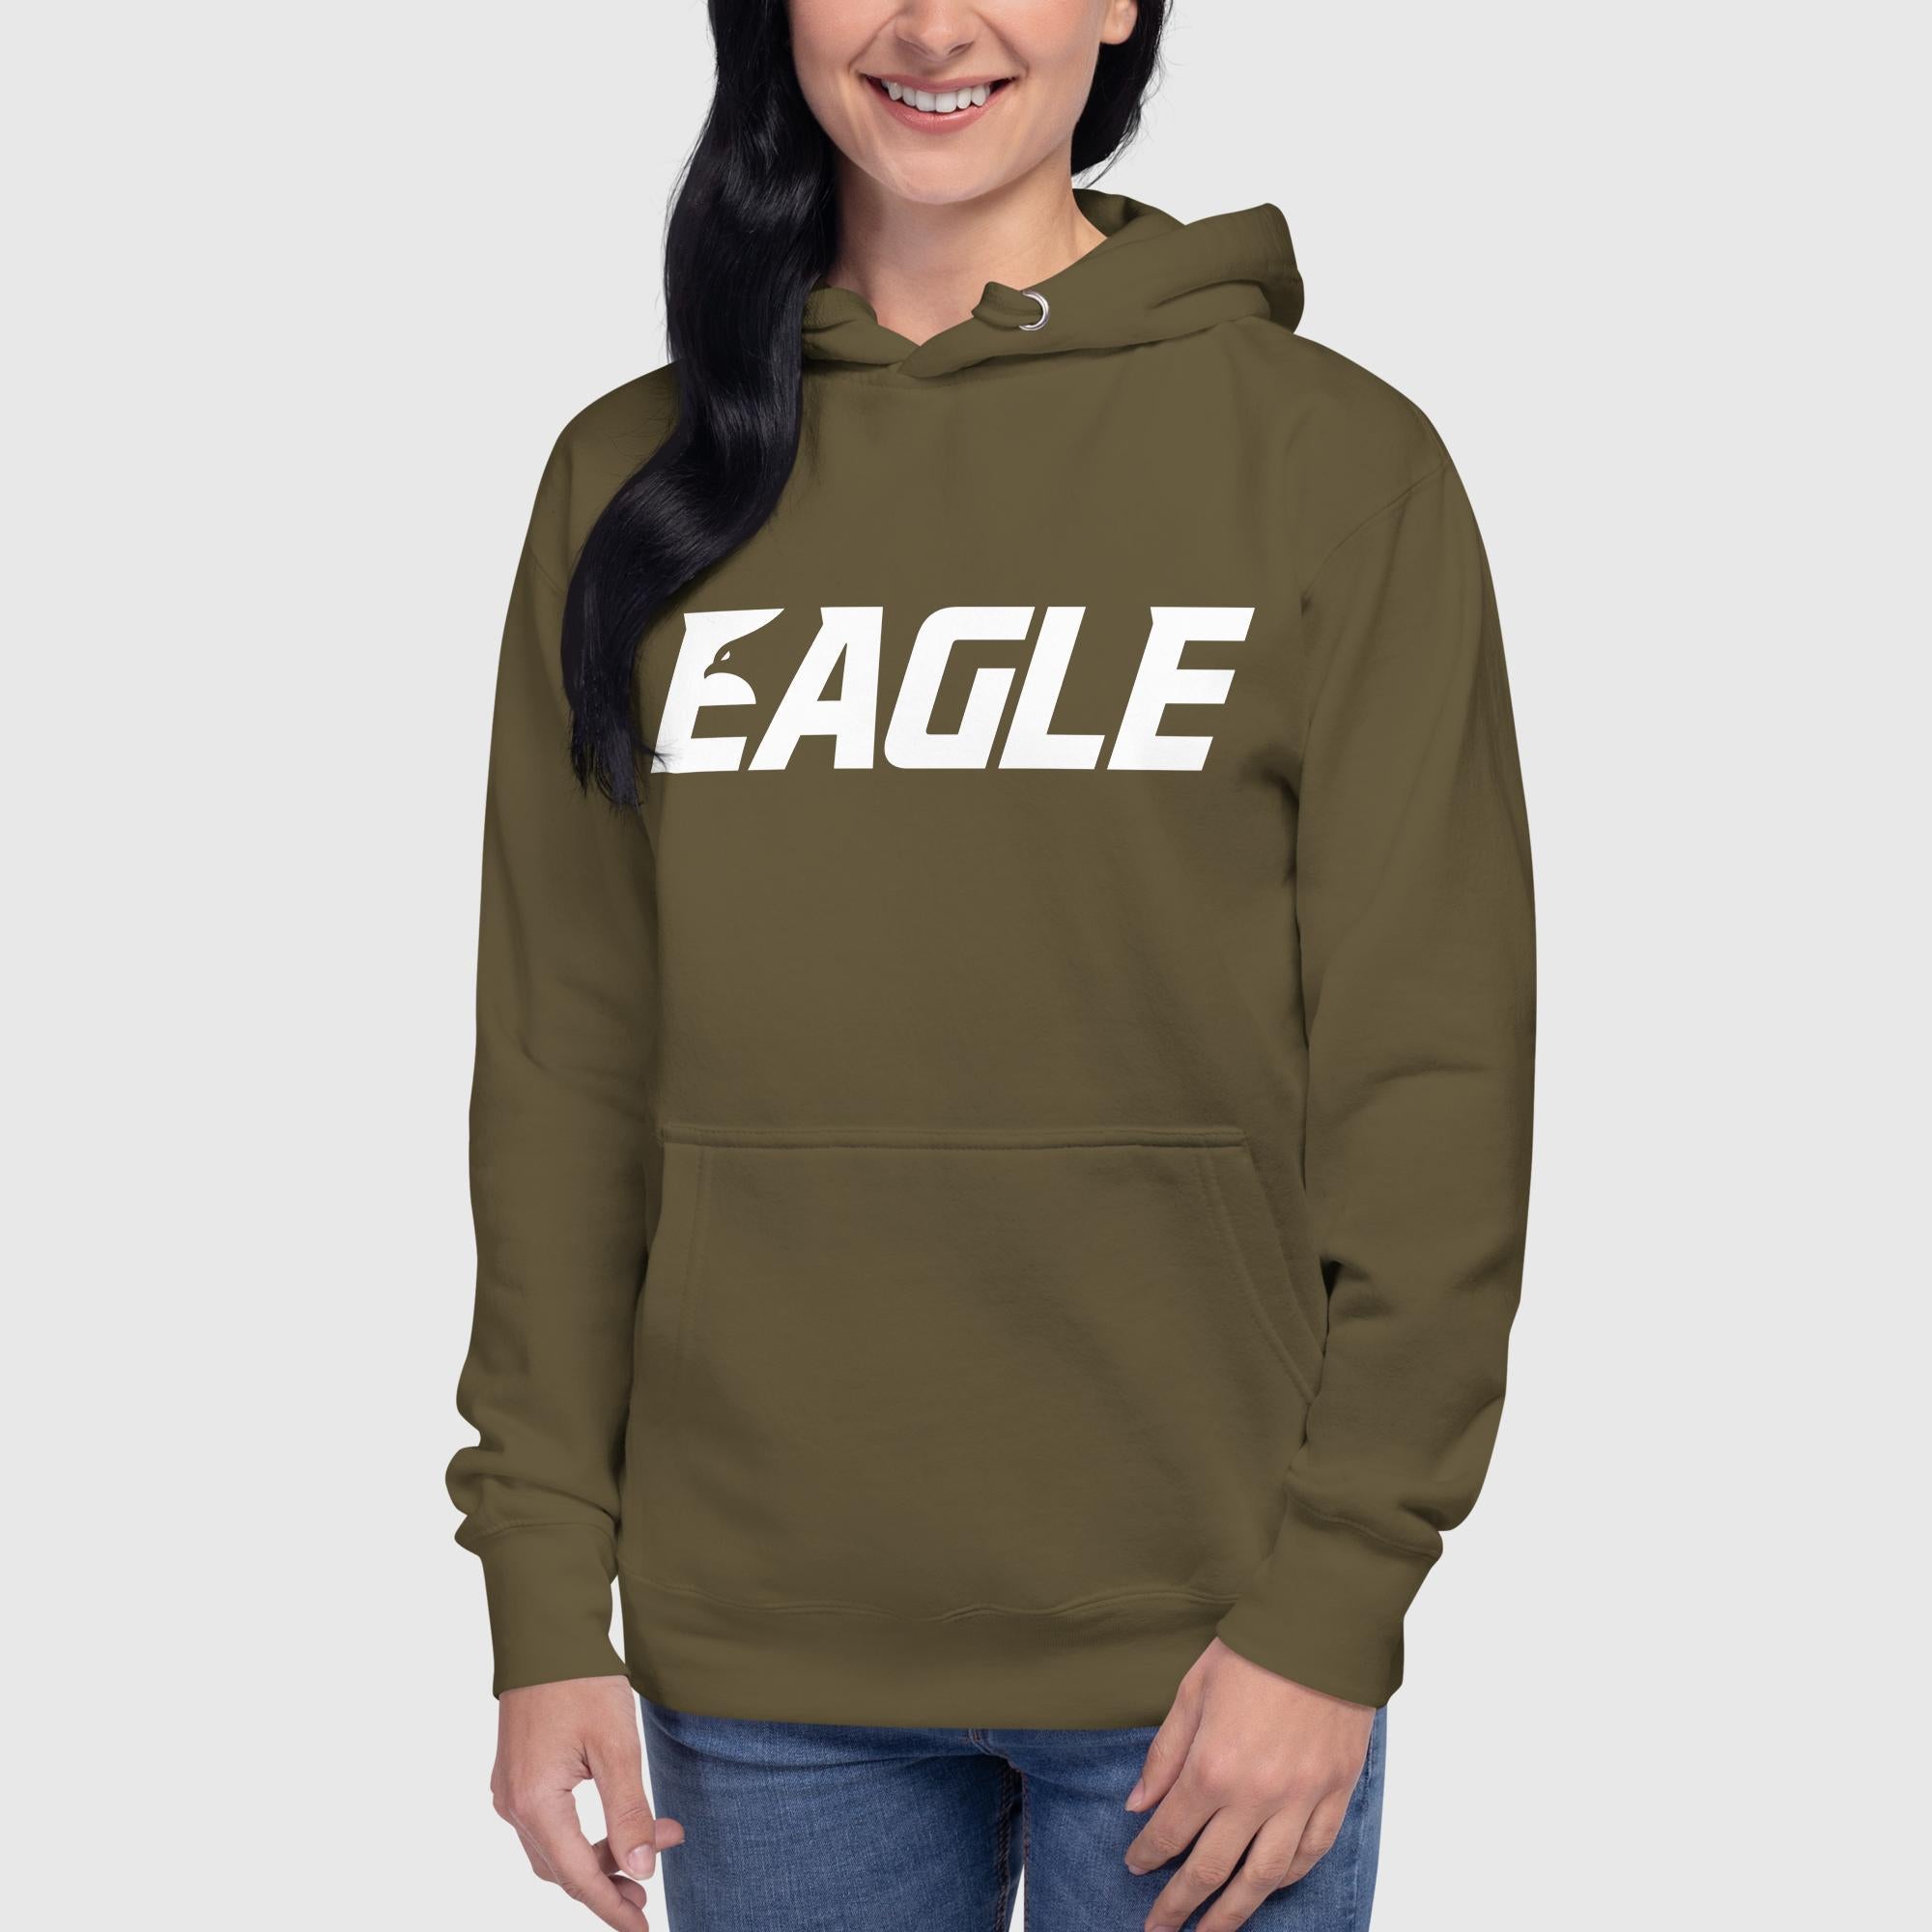 Hoodie Military Green - Eagle